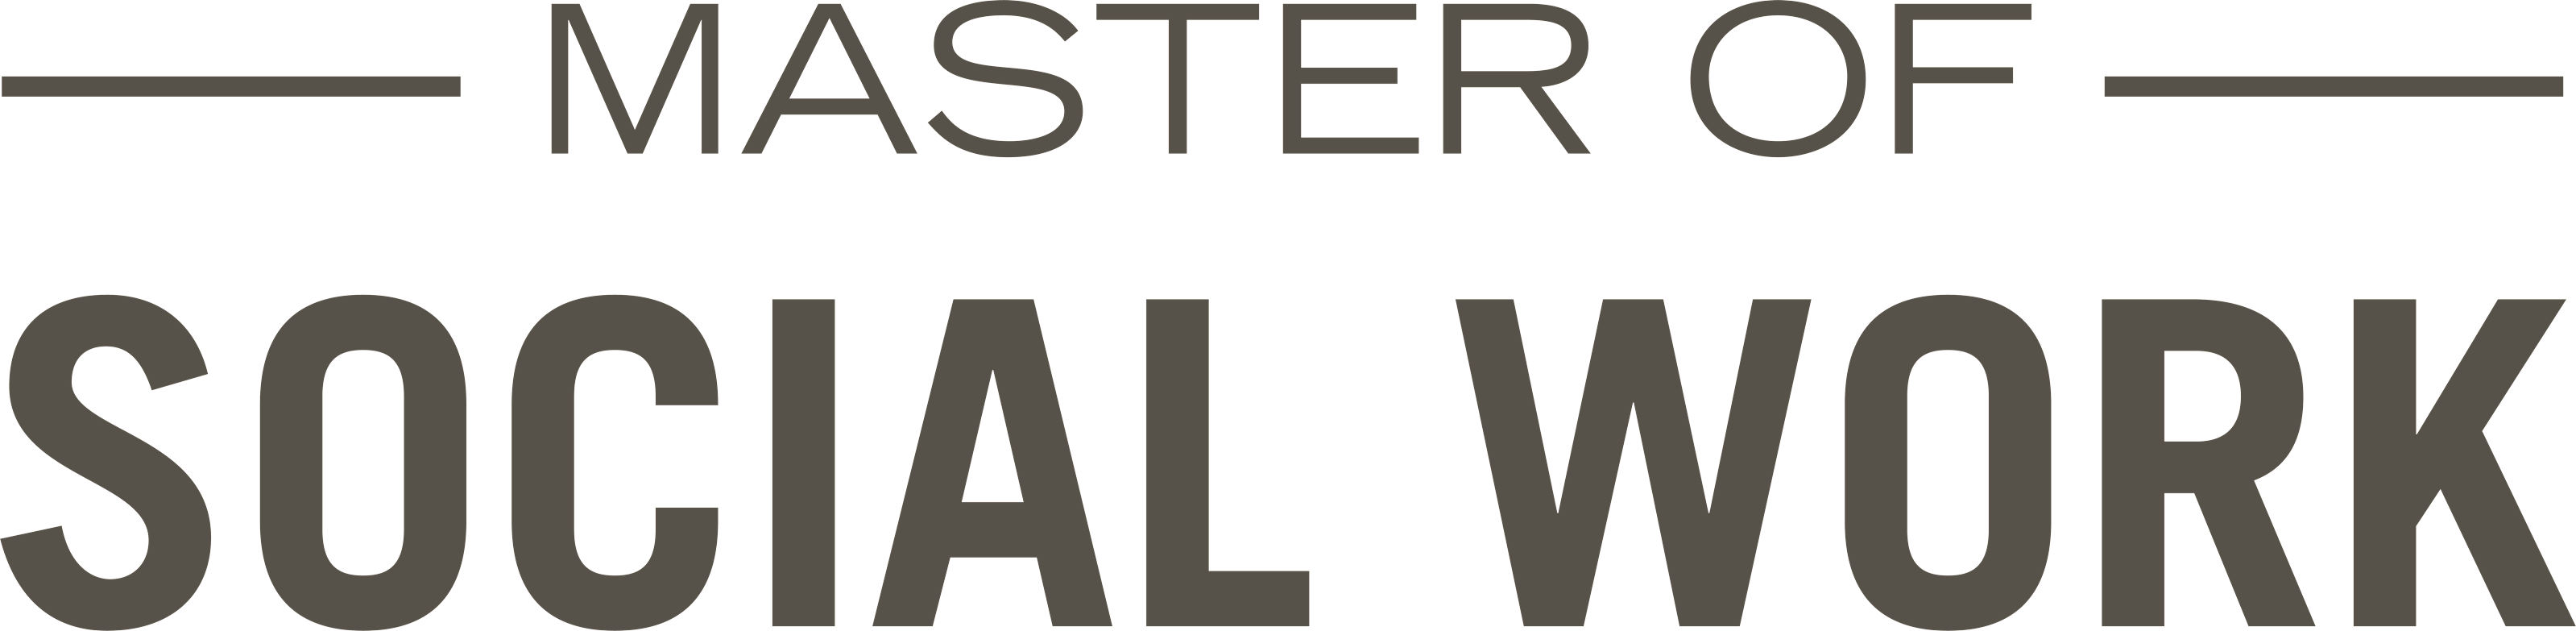 Master of Social Work logo